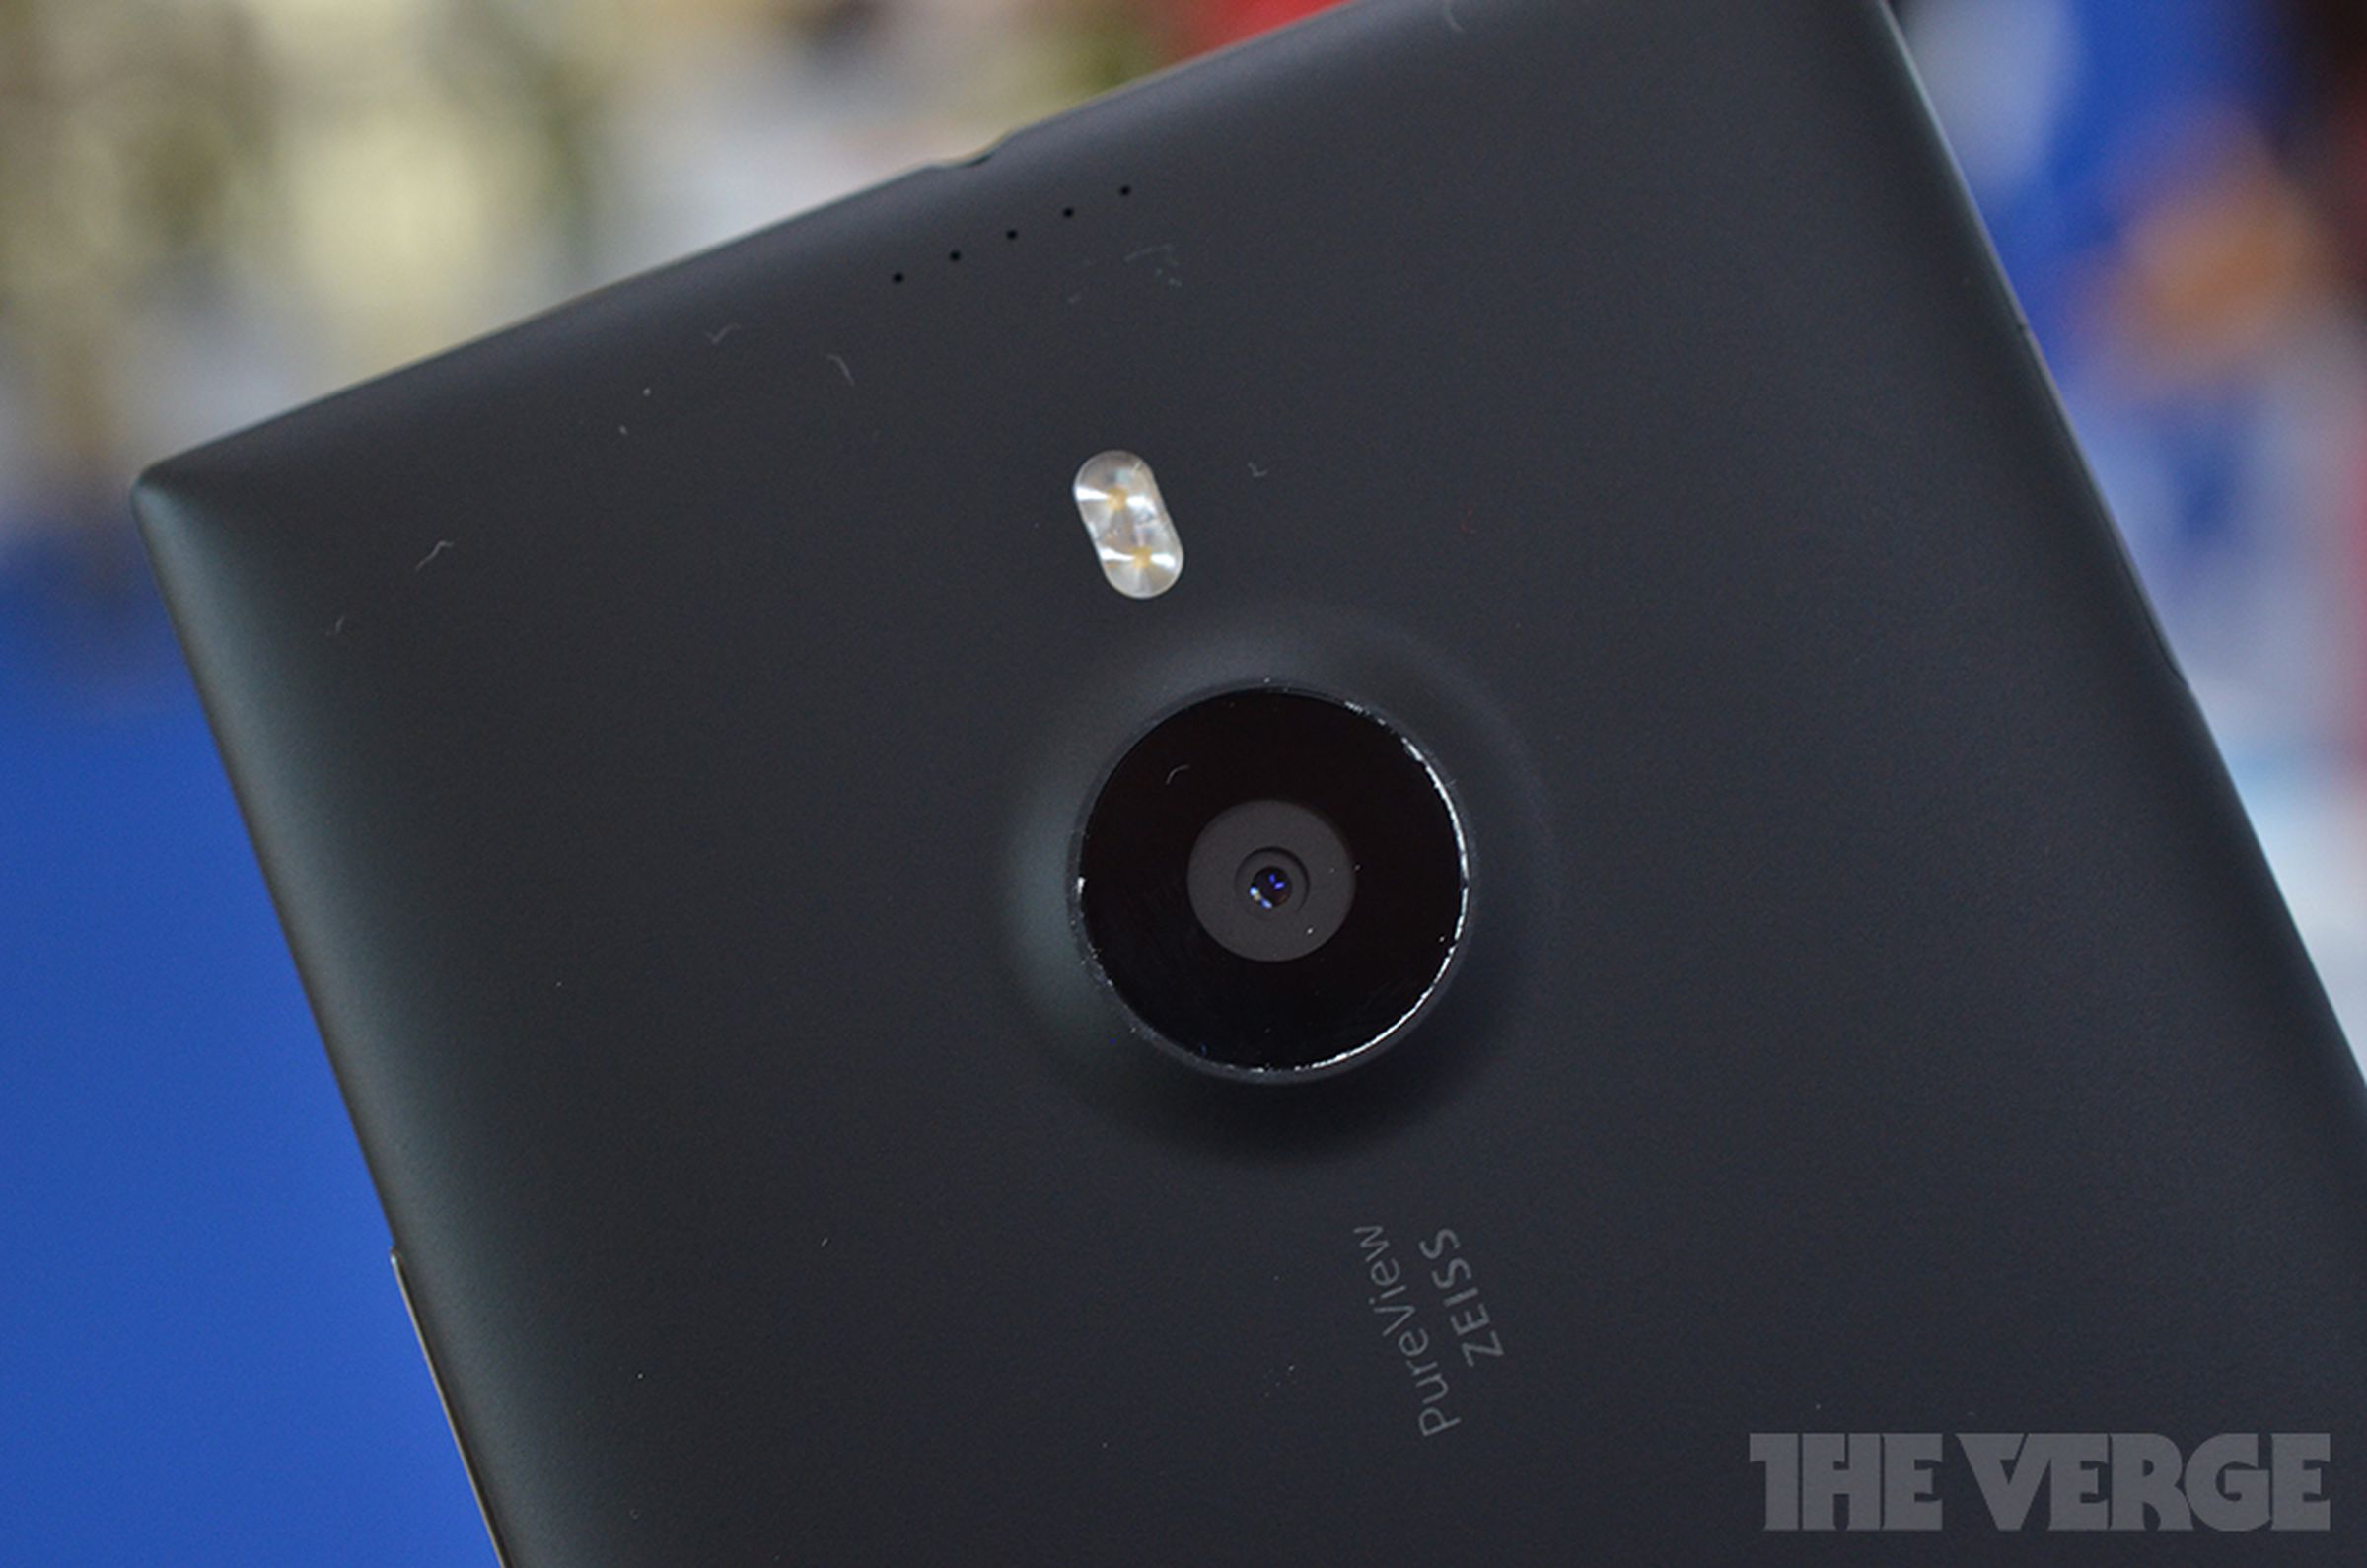 Nokia Lumia 1520 hands-on photos